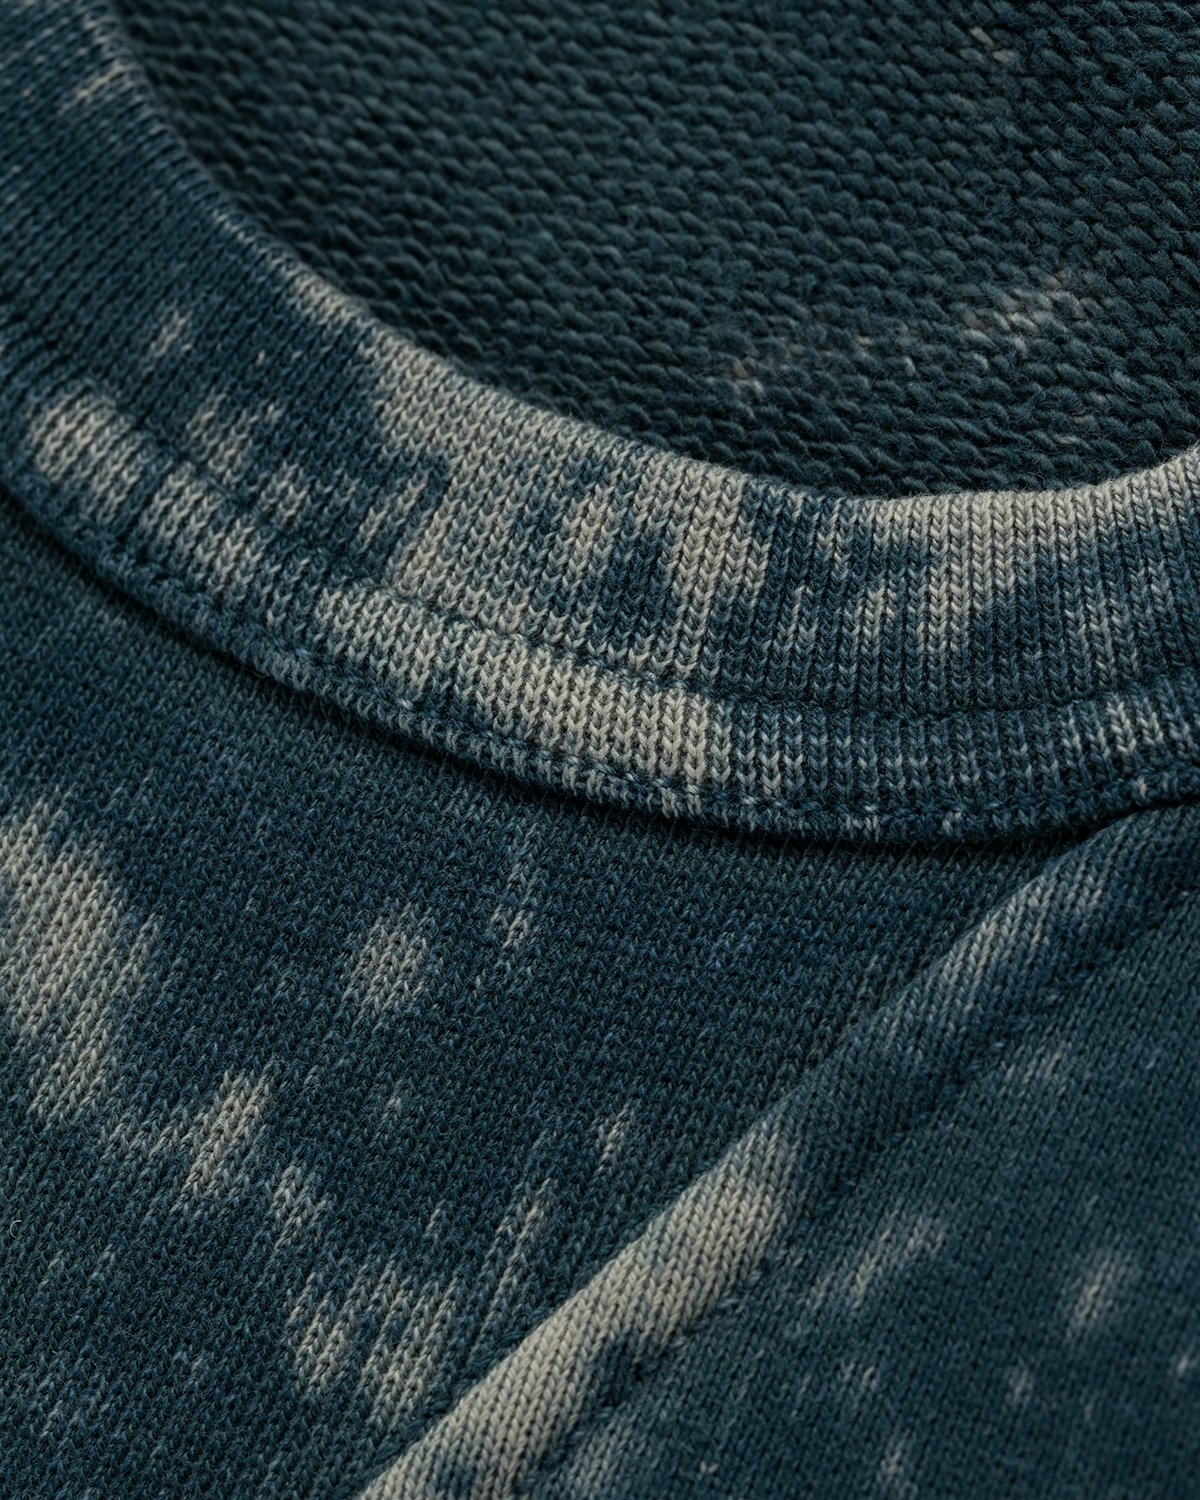 Stone Island - 61538 Garment-Dyed Cotton Fleece Crewneck Mid Blue - Clothing - Blue - Image 3